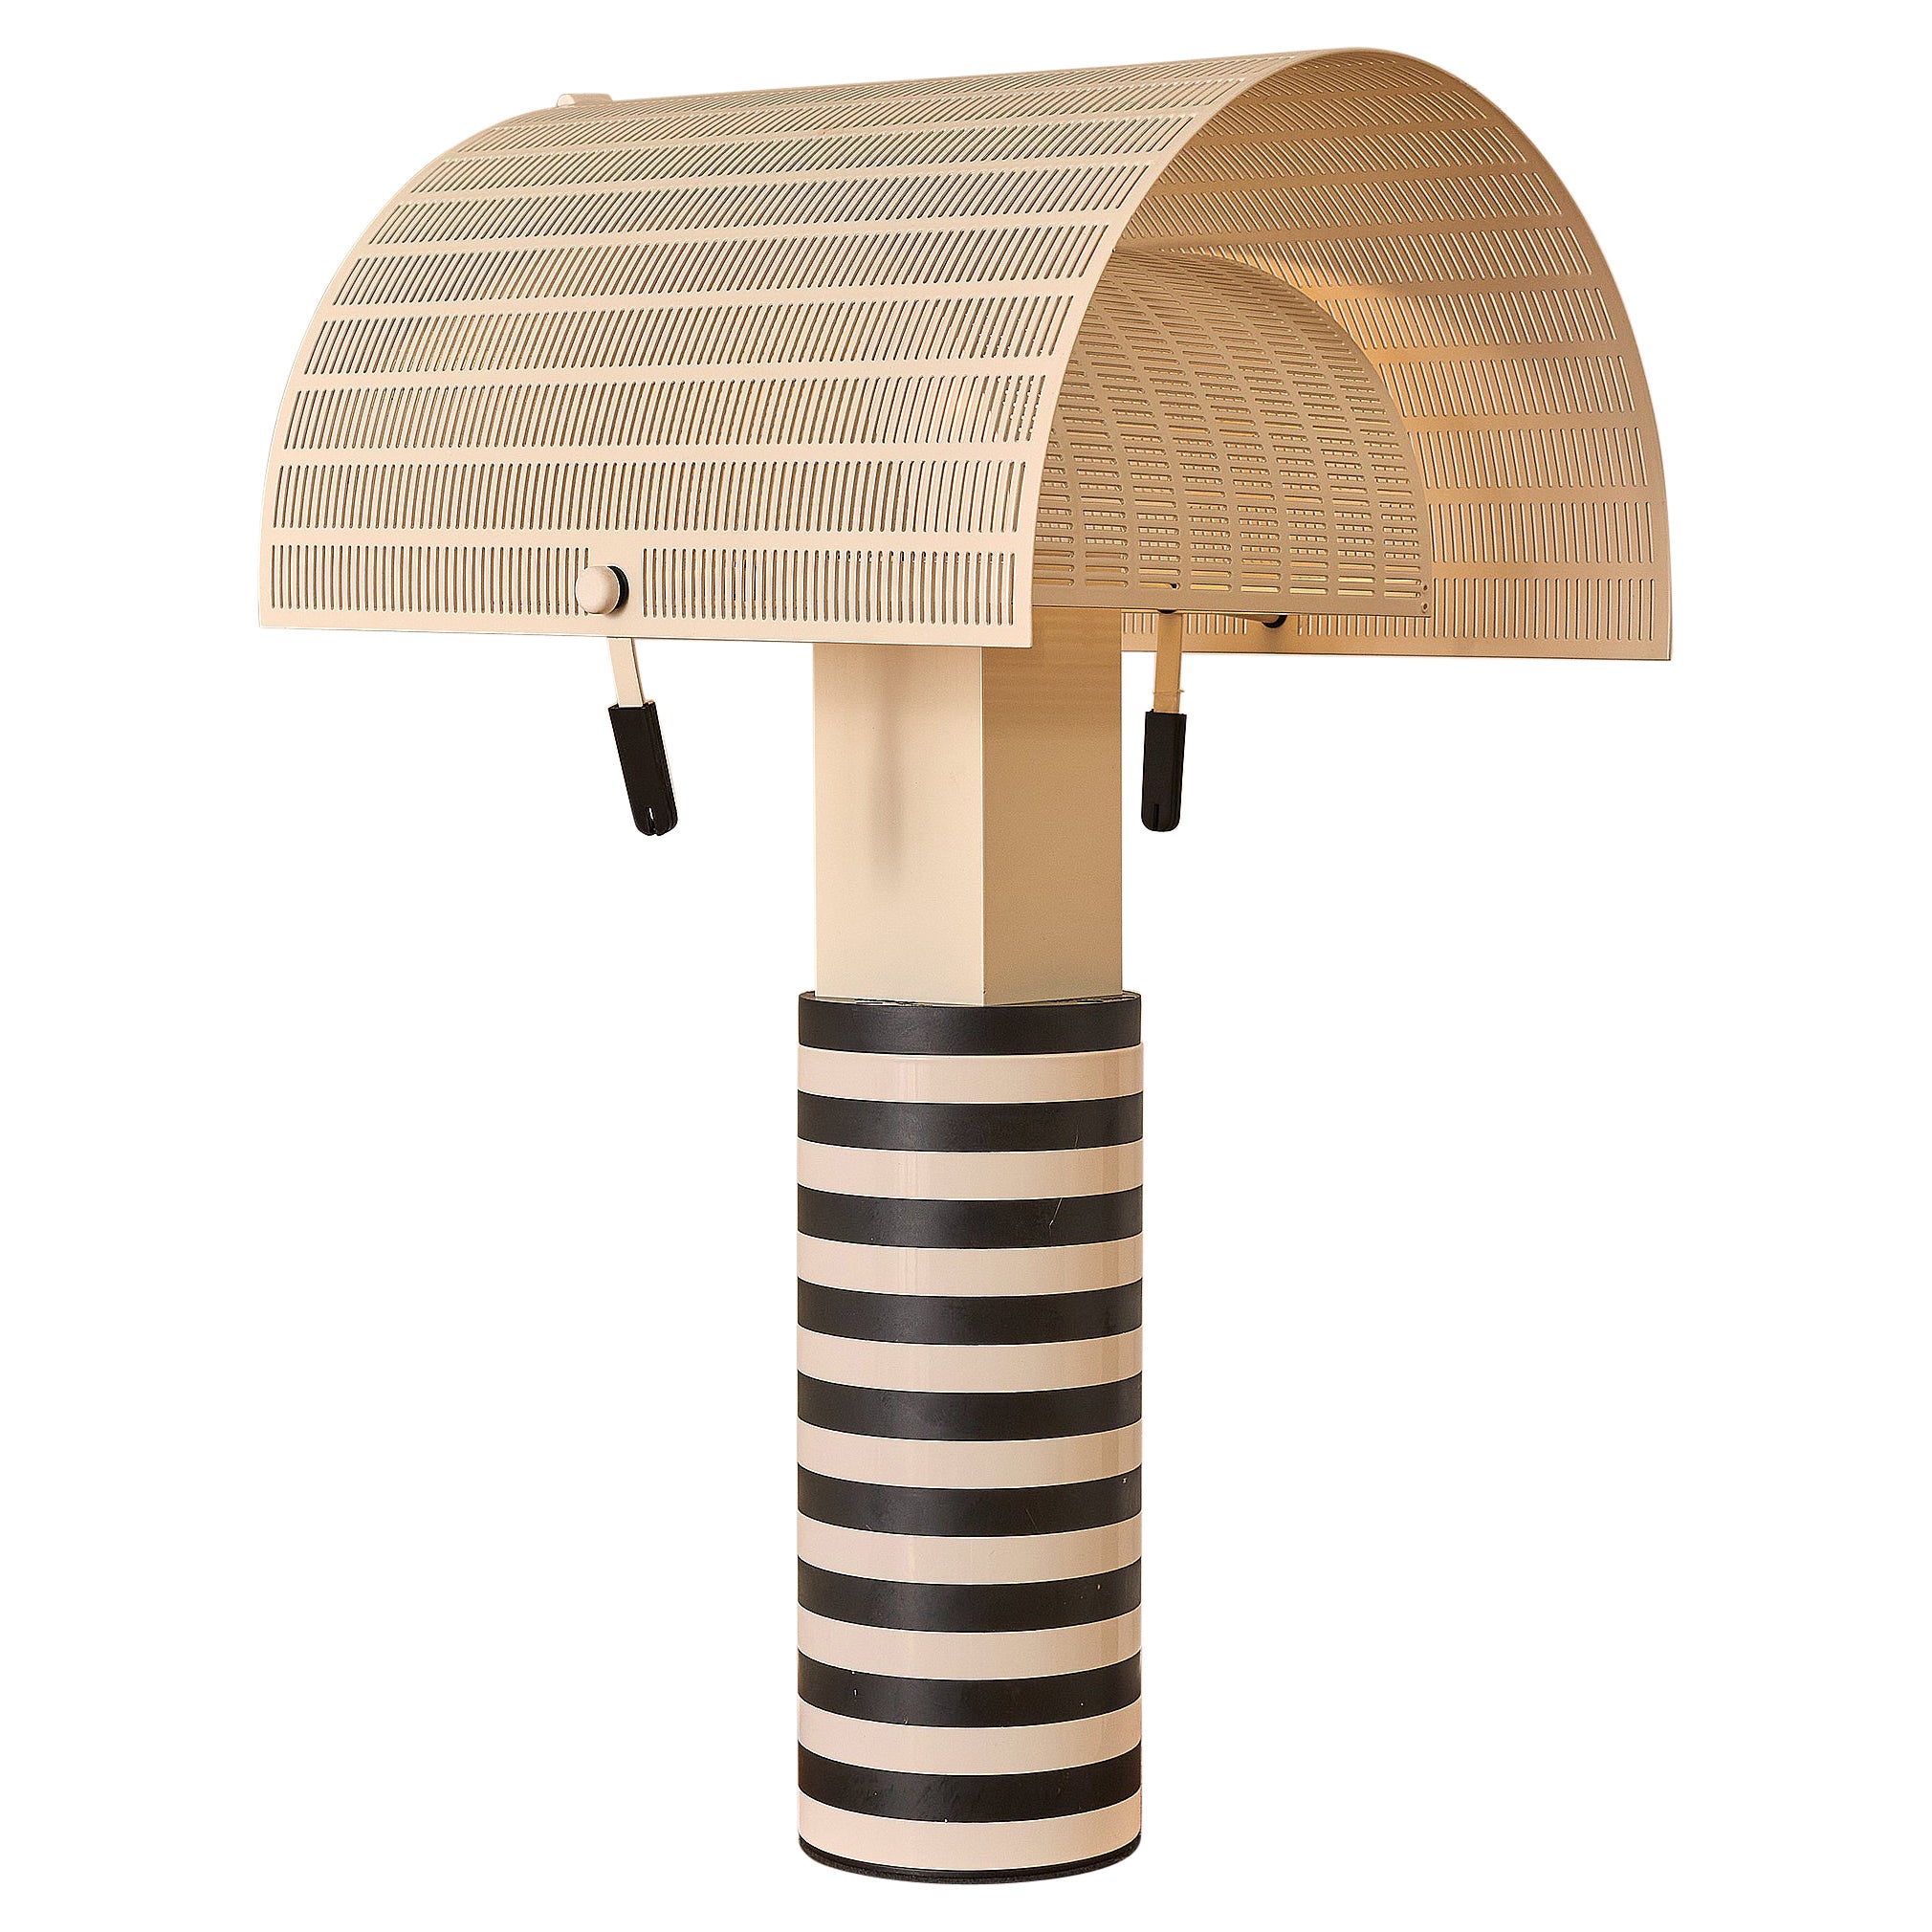 Shogun Table Lamp by Mario Botta for Artemide